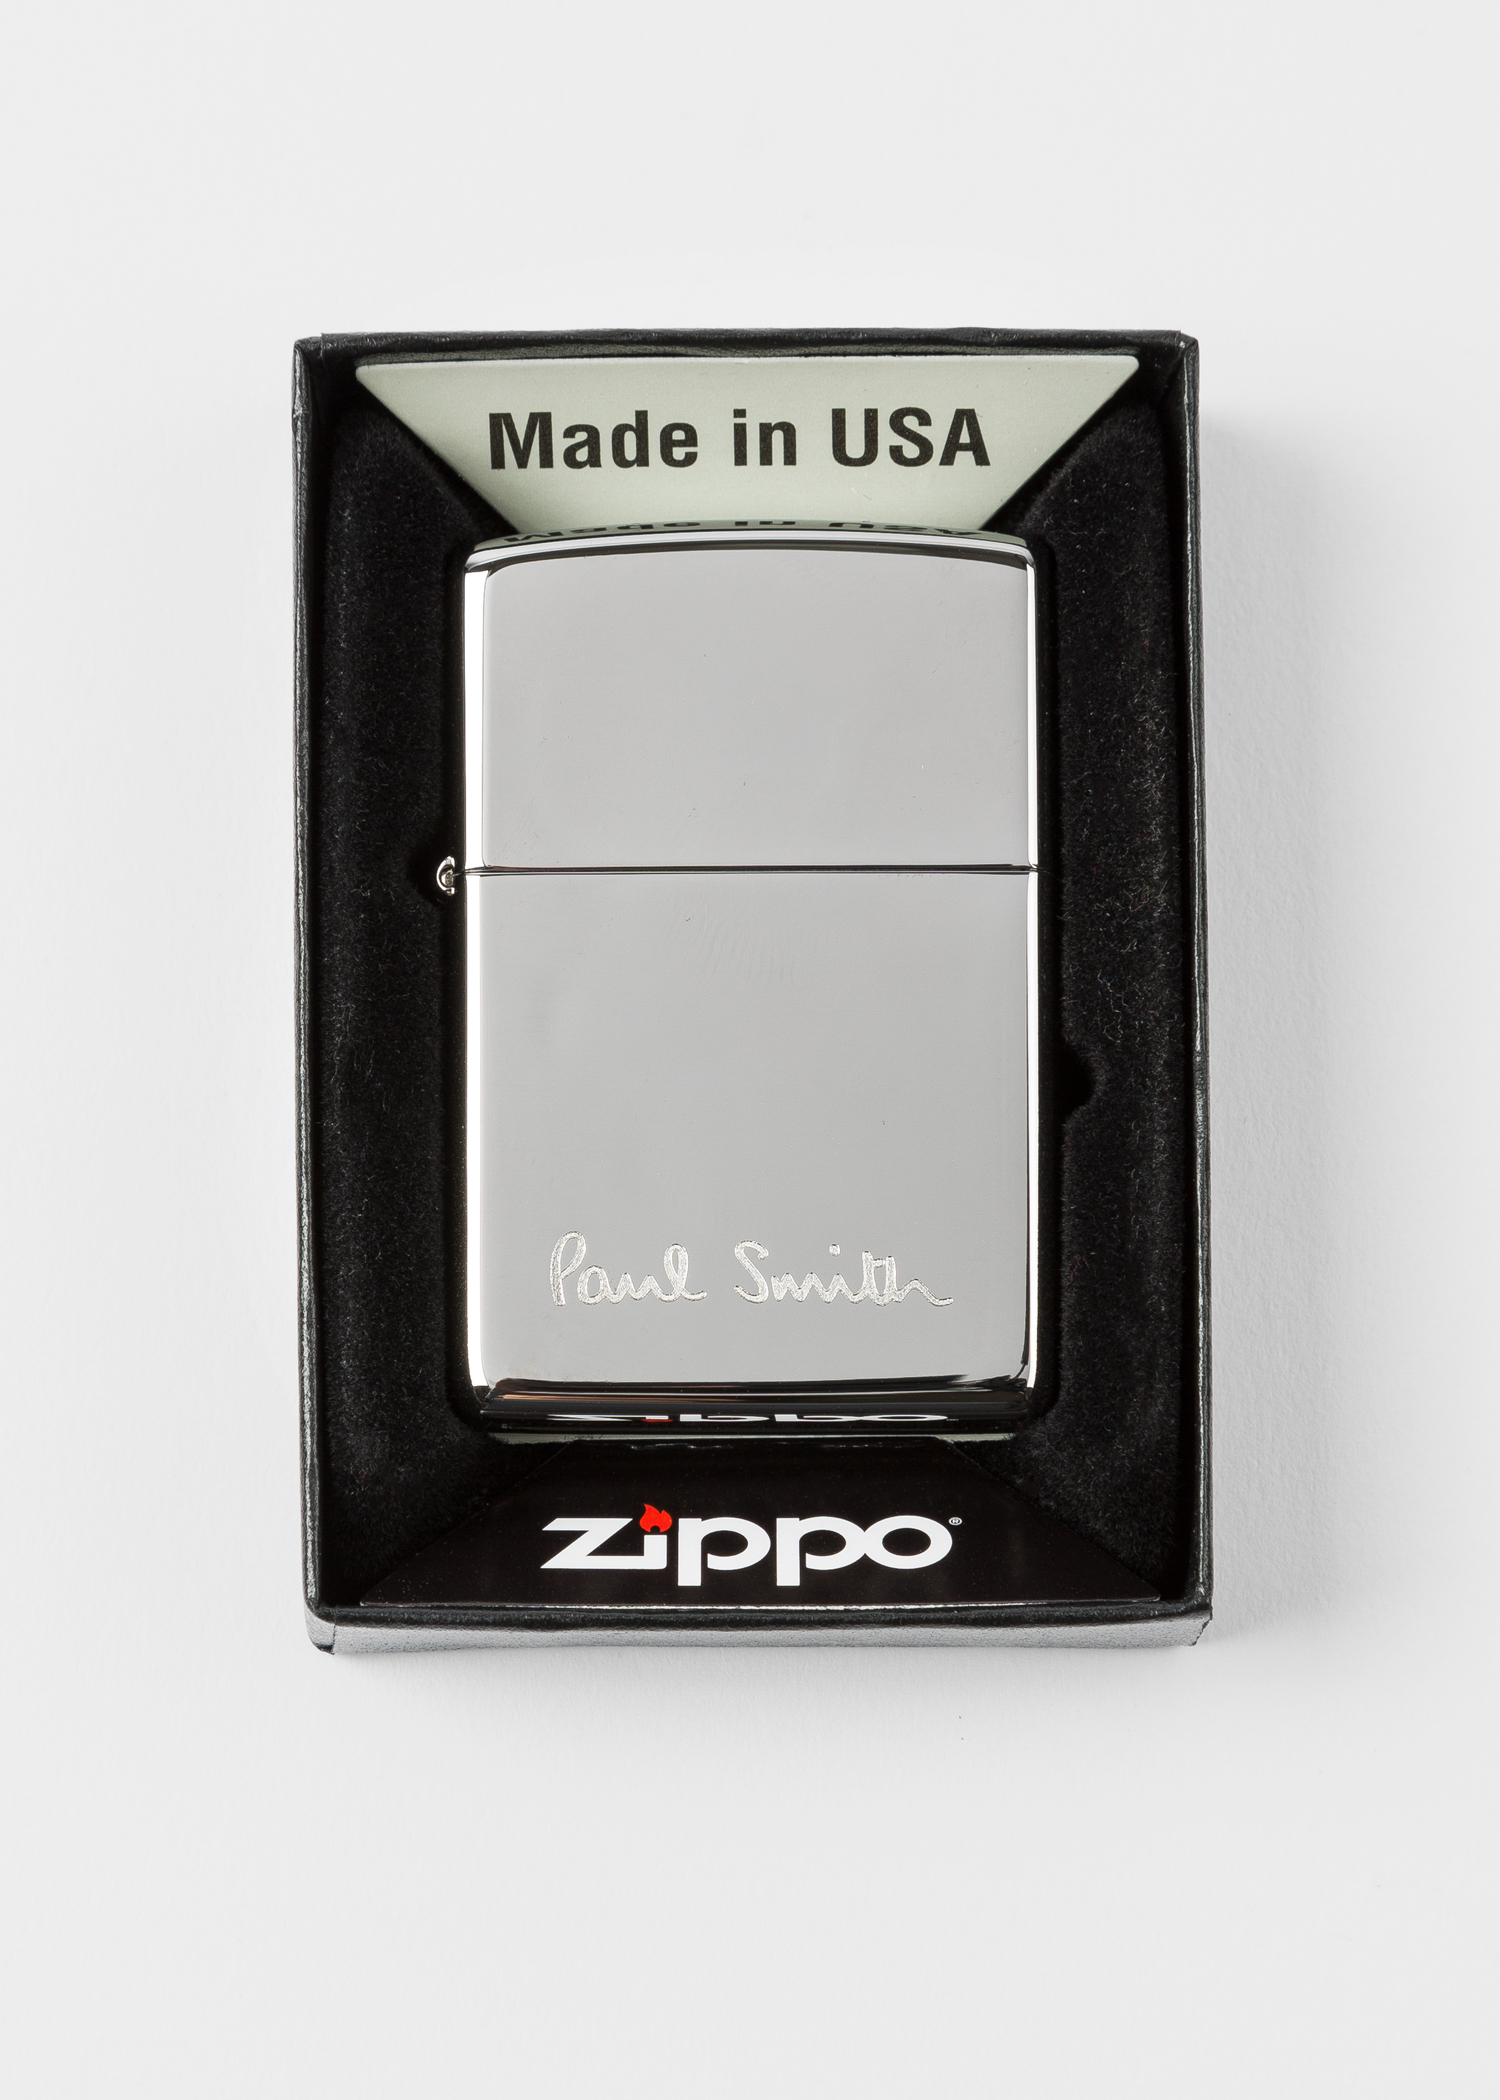 Paul Smith Logo Zippo Lighter